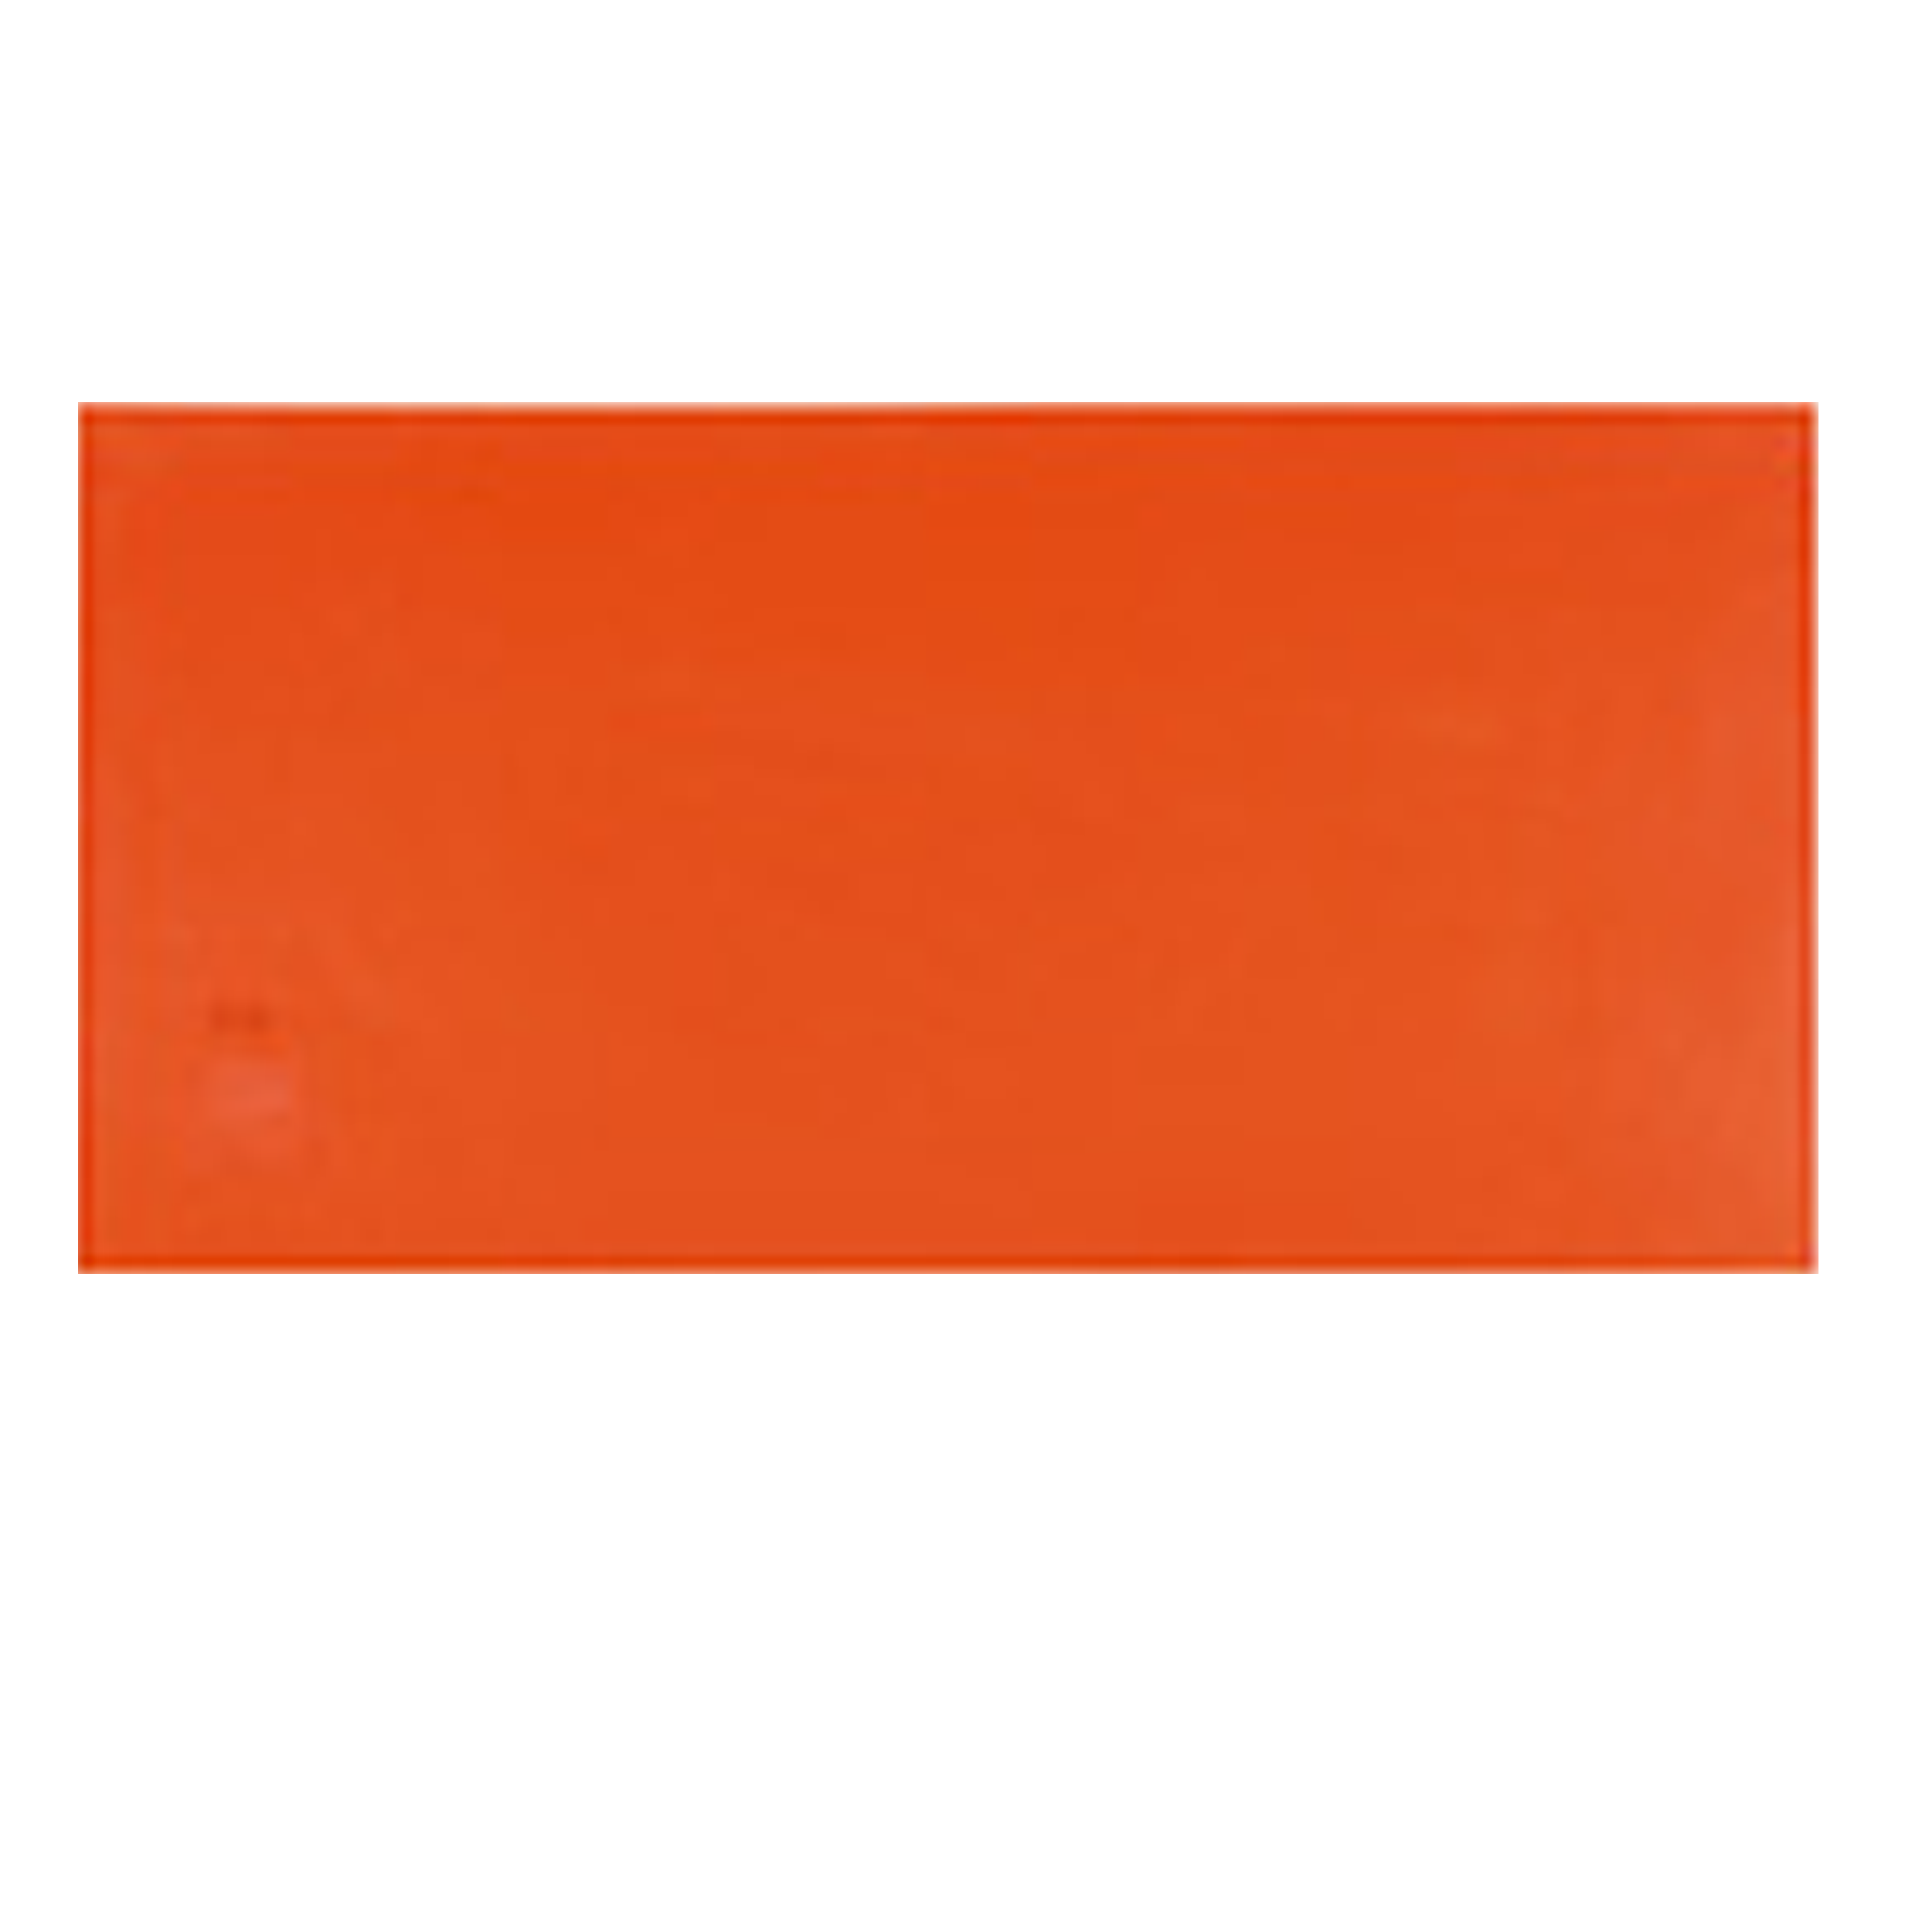 PIP 187-4 Novax Class 4 Rubber Insulating Blanket - Orange